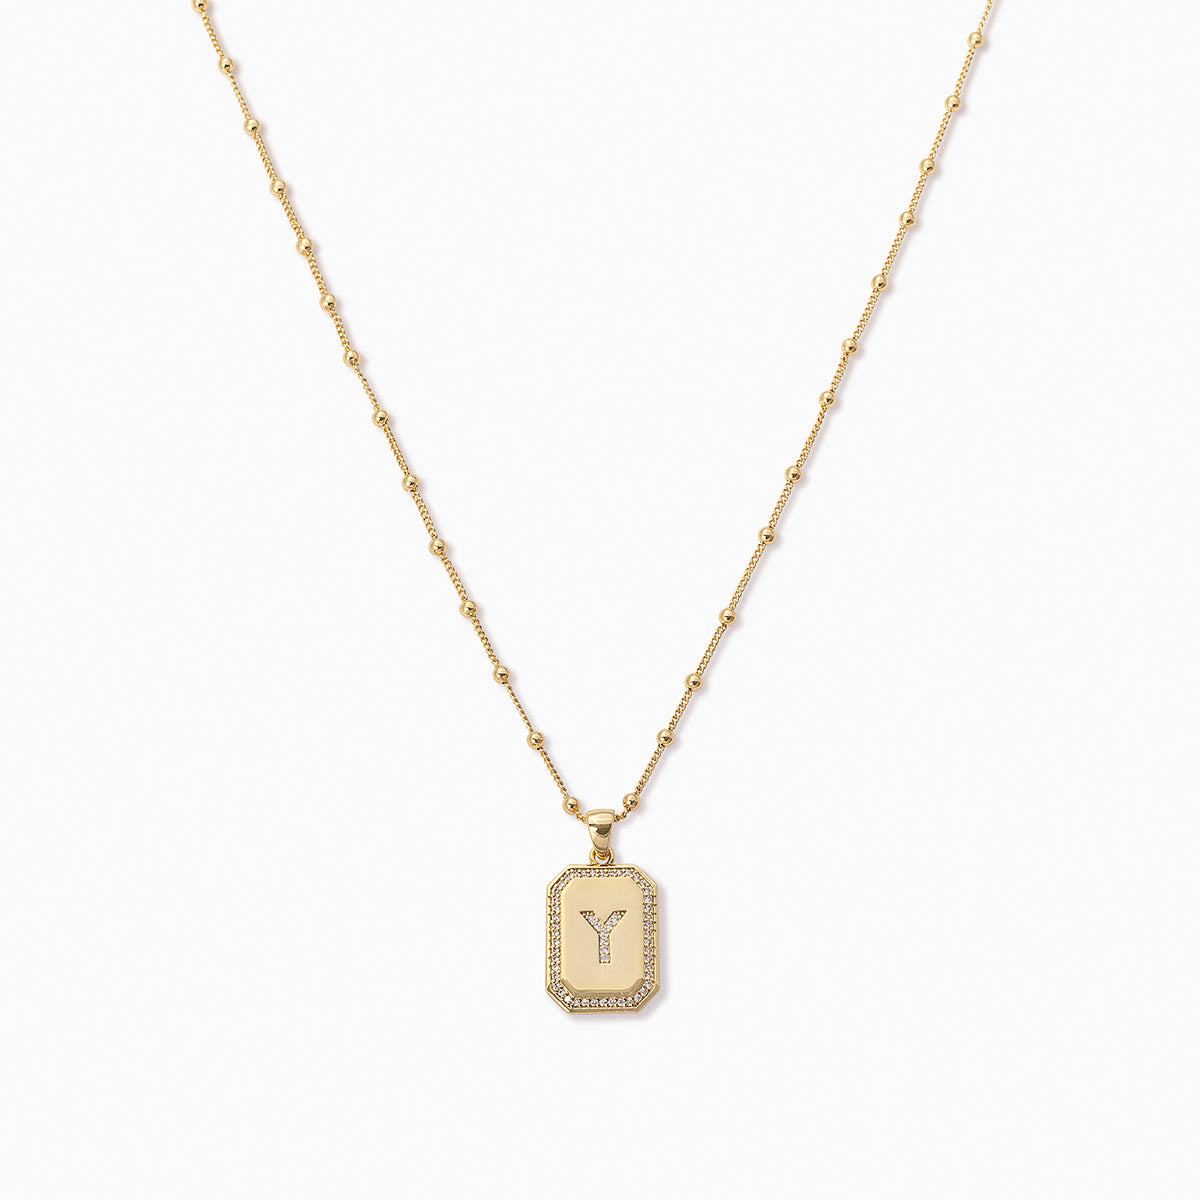 Sur 2.0 Necklace | Gold Y | Product Image | Uncommon James